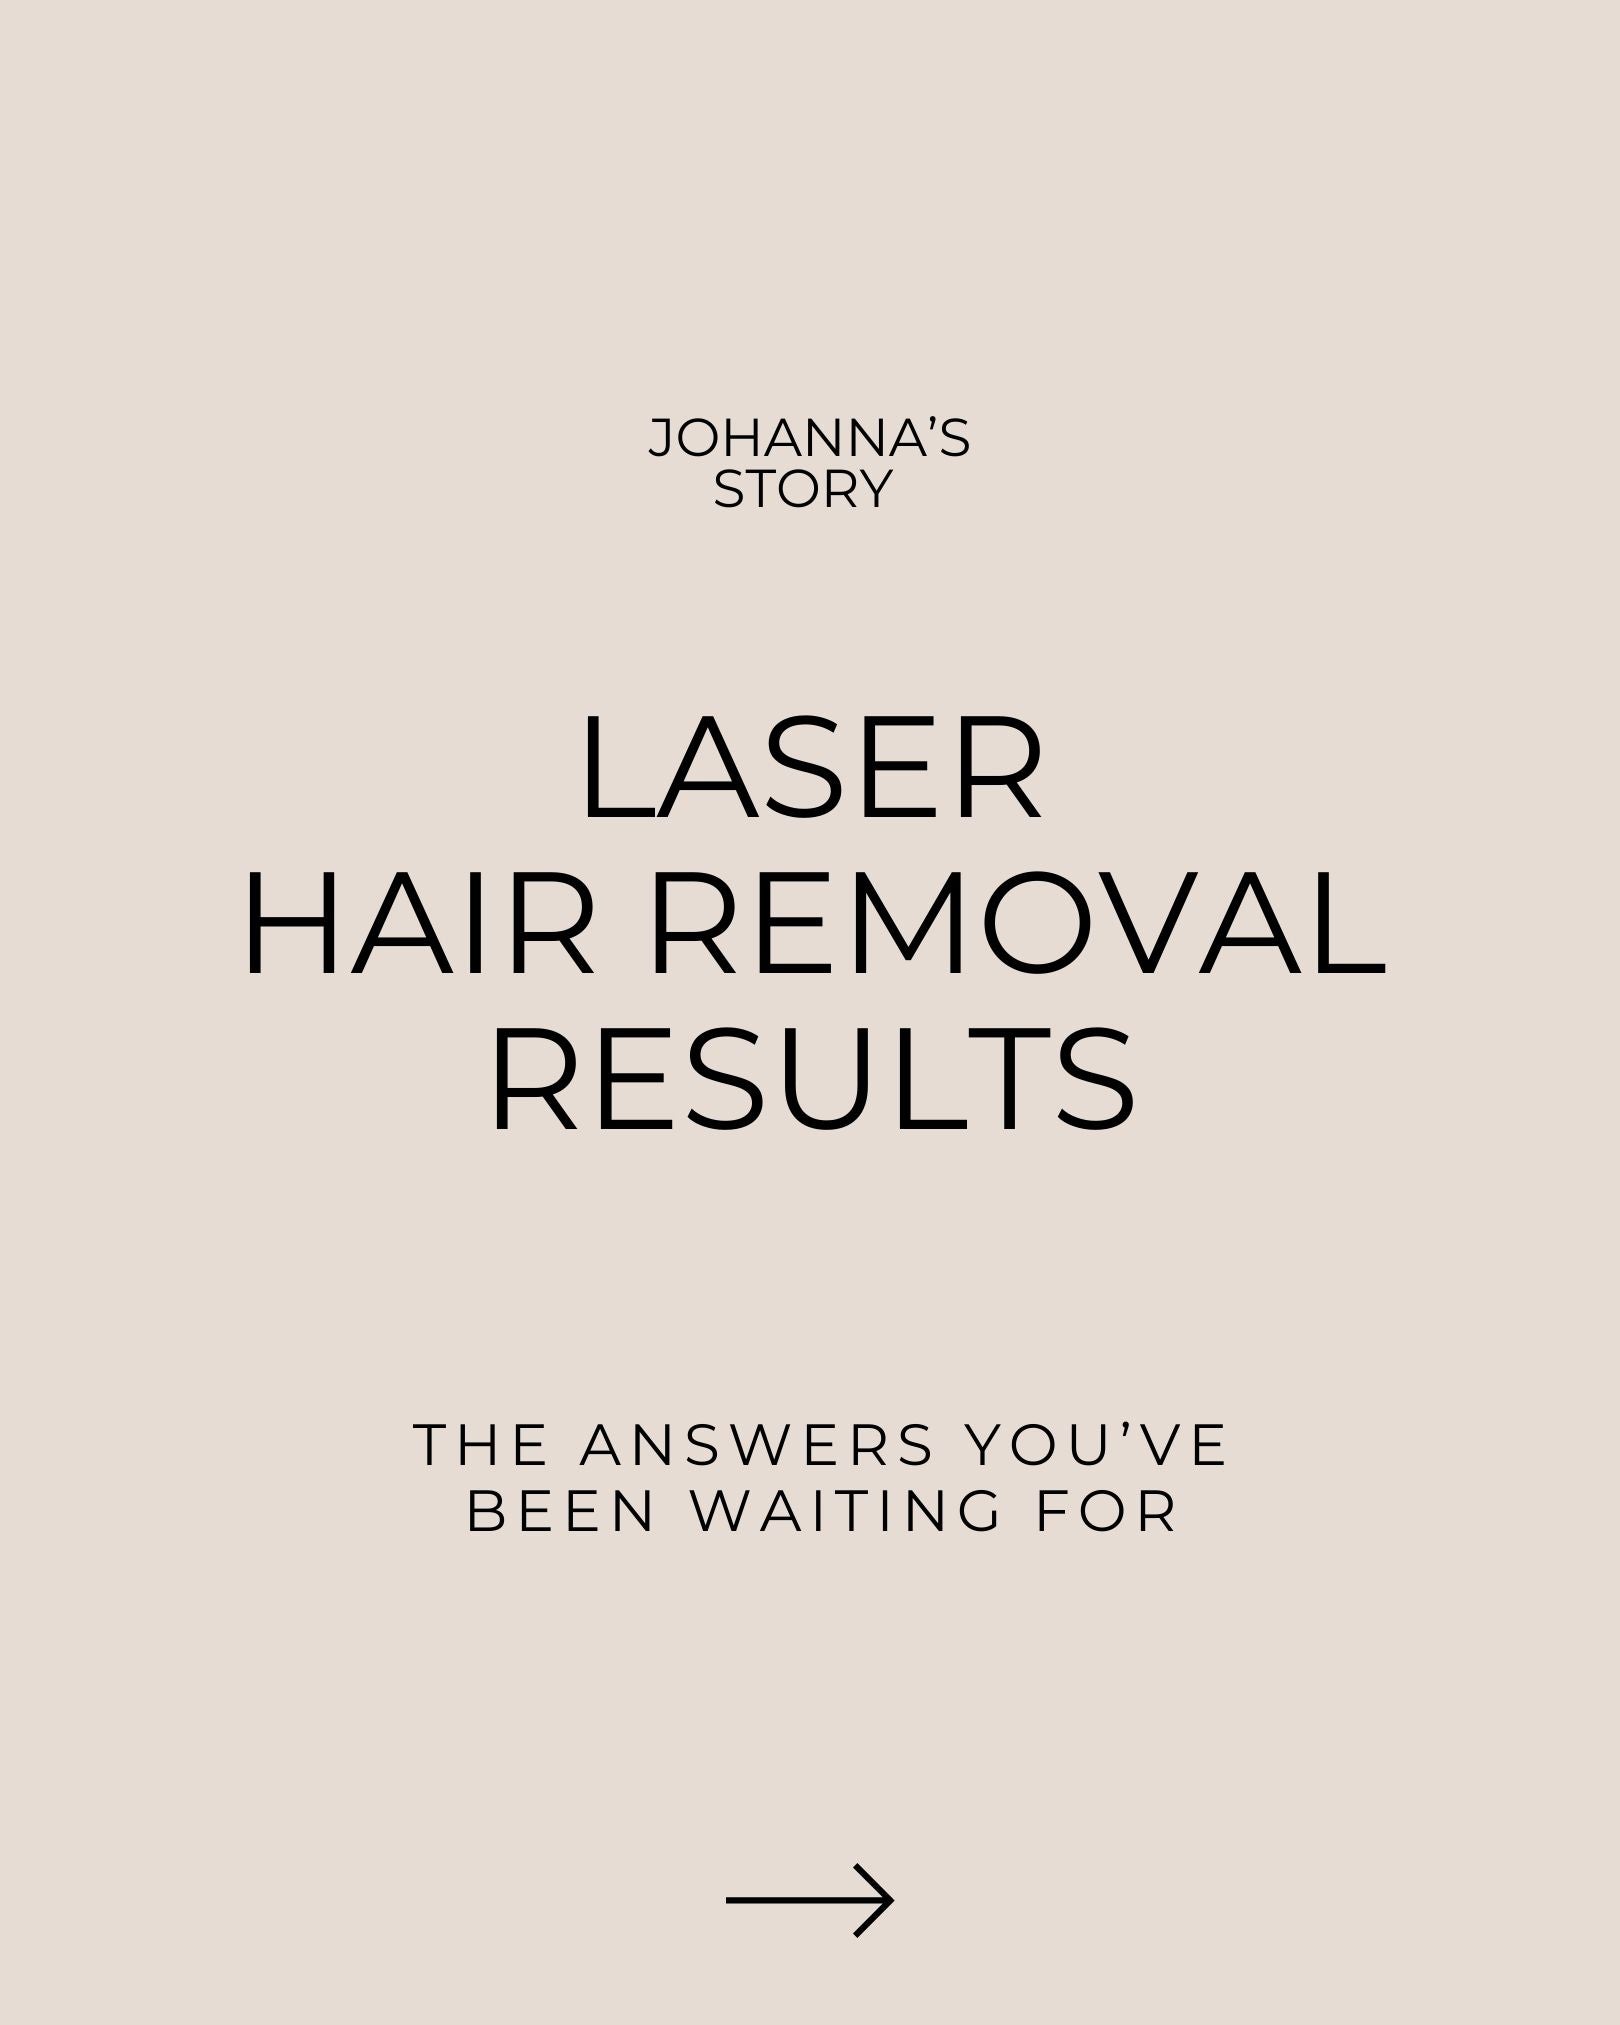 Laser Hair Removal - Johanna's Story